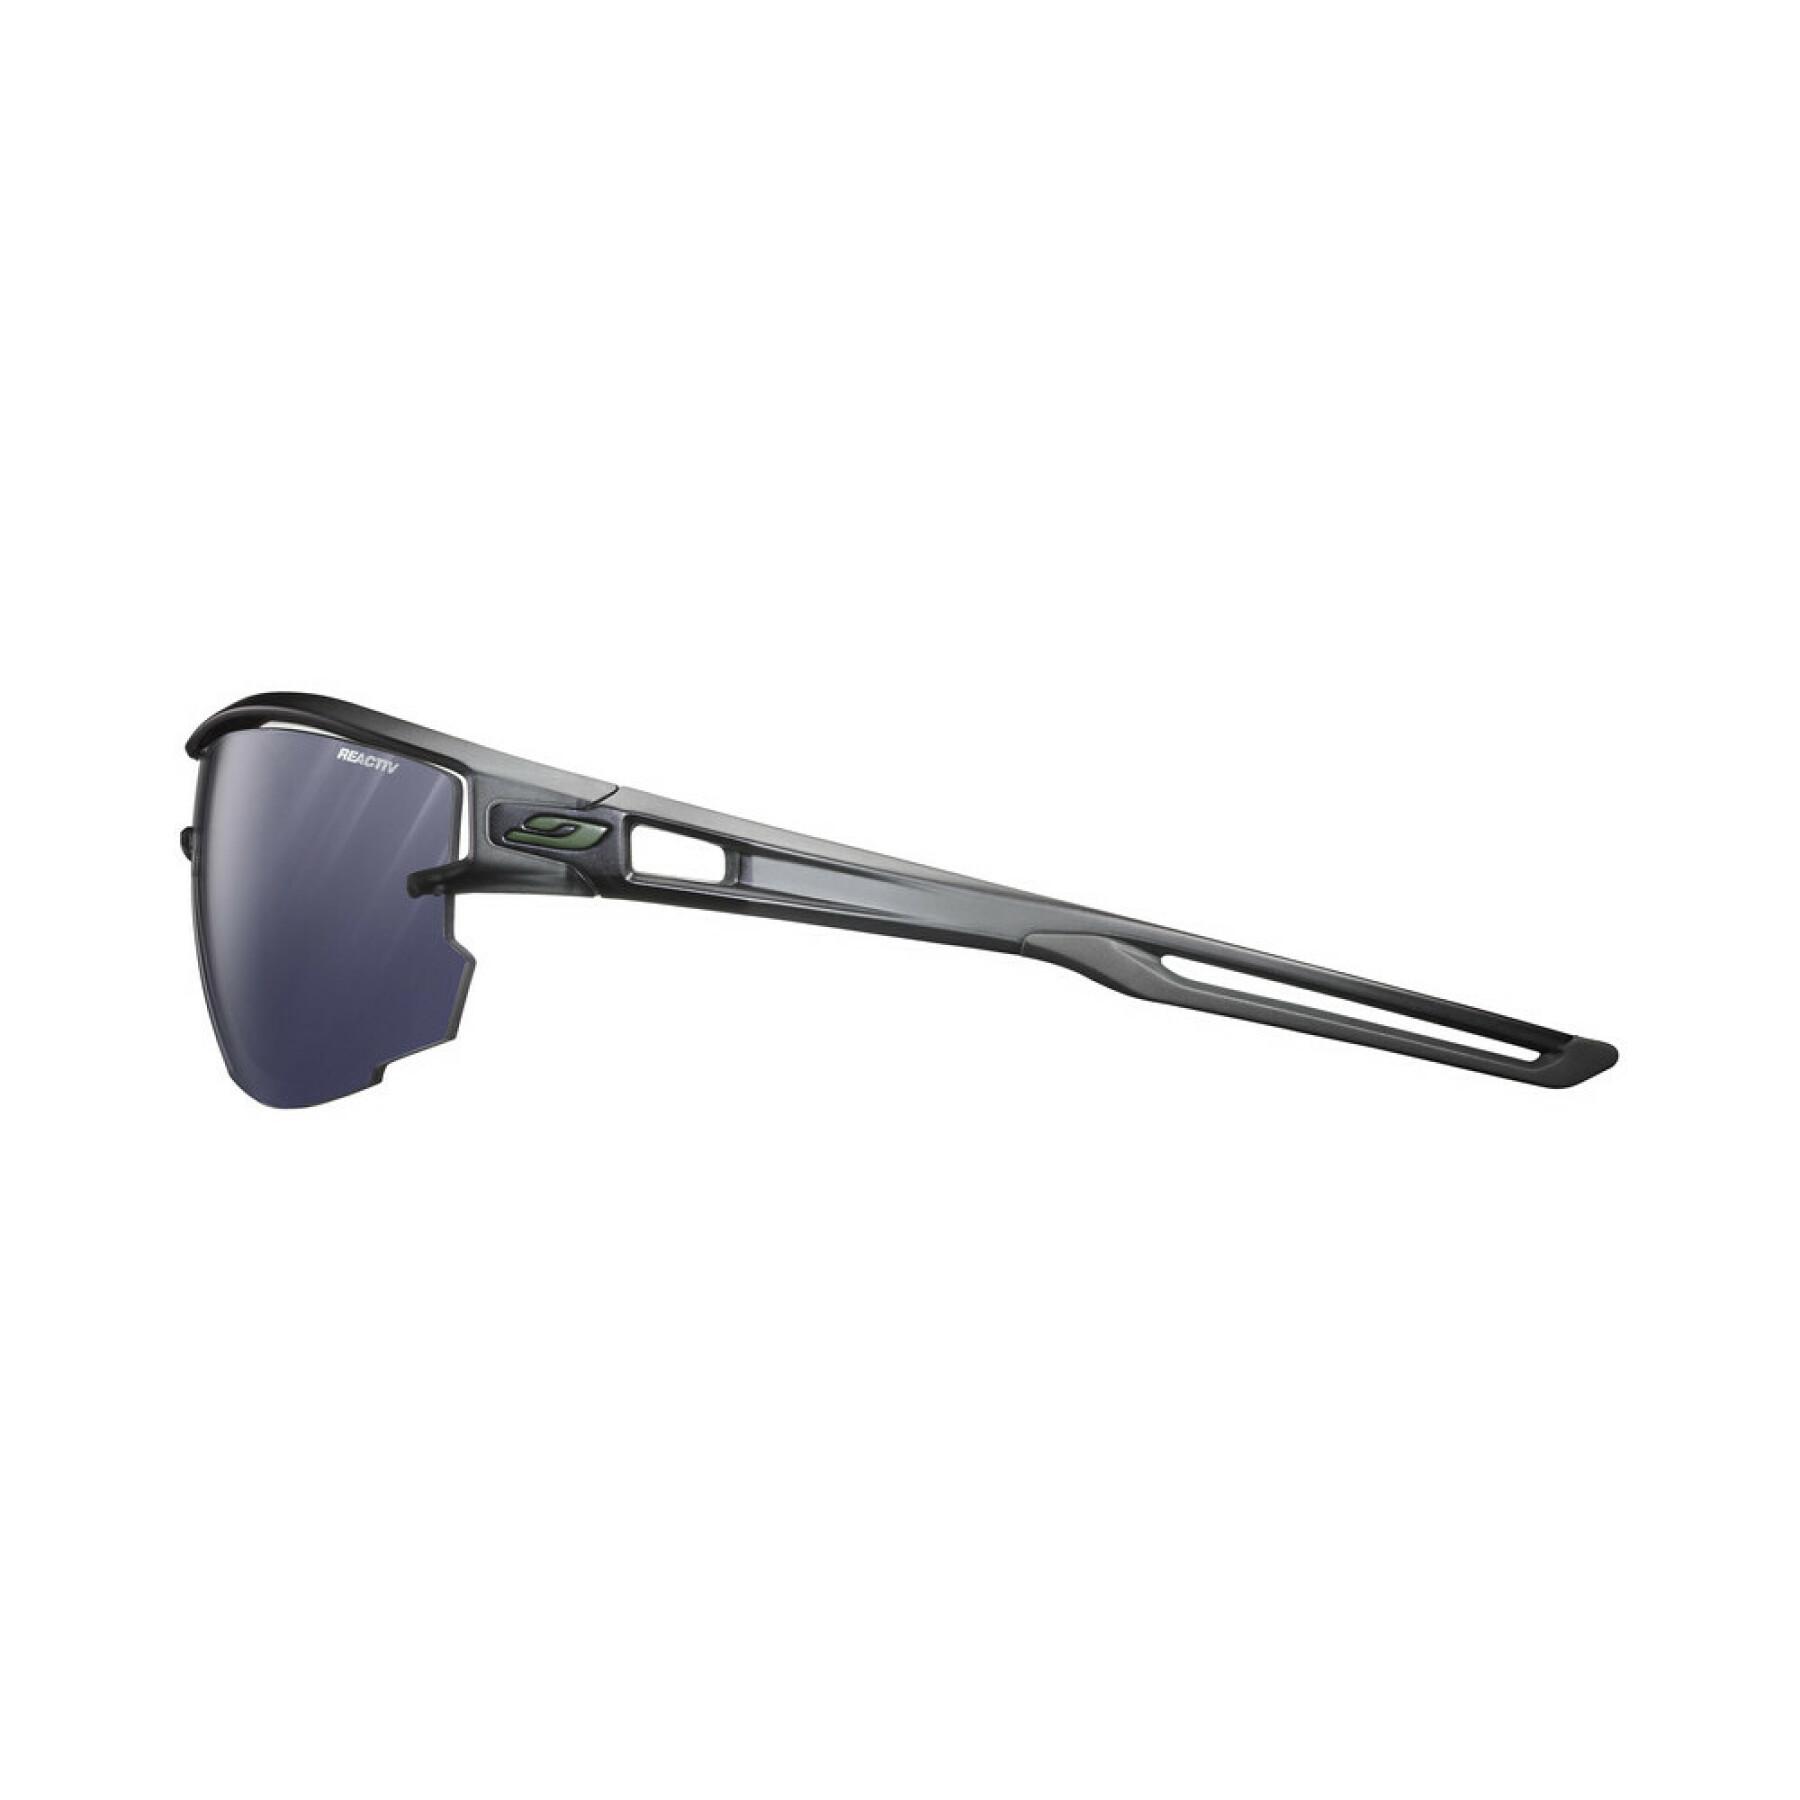 Sunglasses Julbo Aero Reactiv 0-3